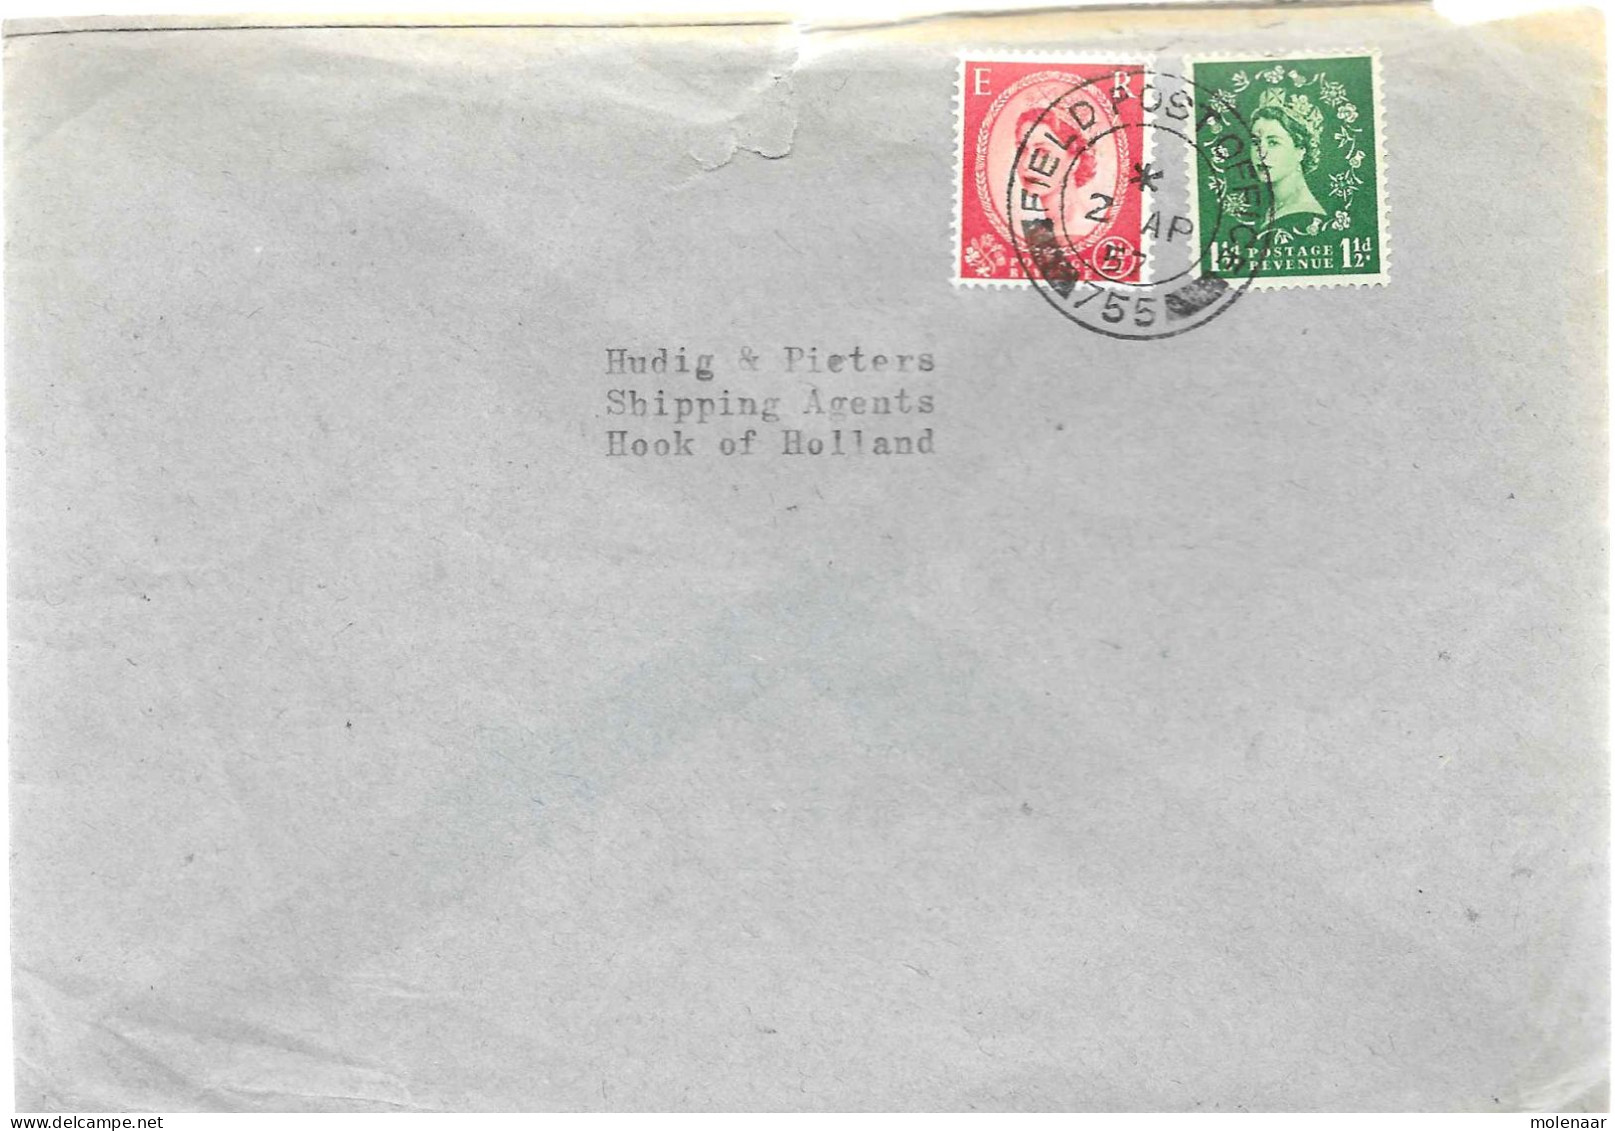 Postzegels > Europa > Groot-Brittannië >1952-2022 Elizabeth II >Brief Met No, 259-261 Field Post Office 755 (17498) - Covers & Documents